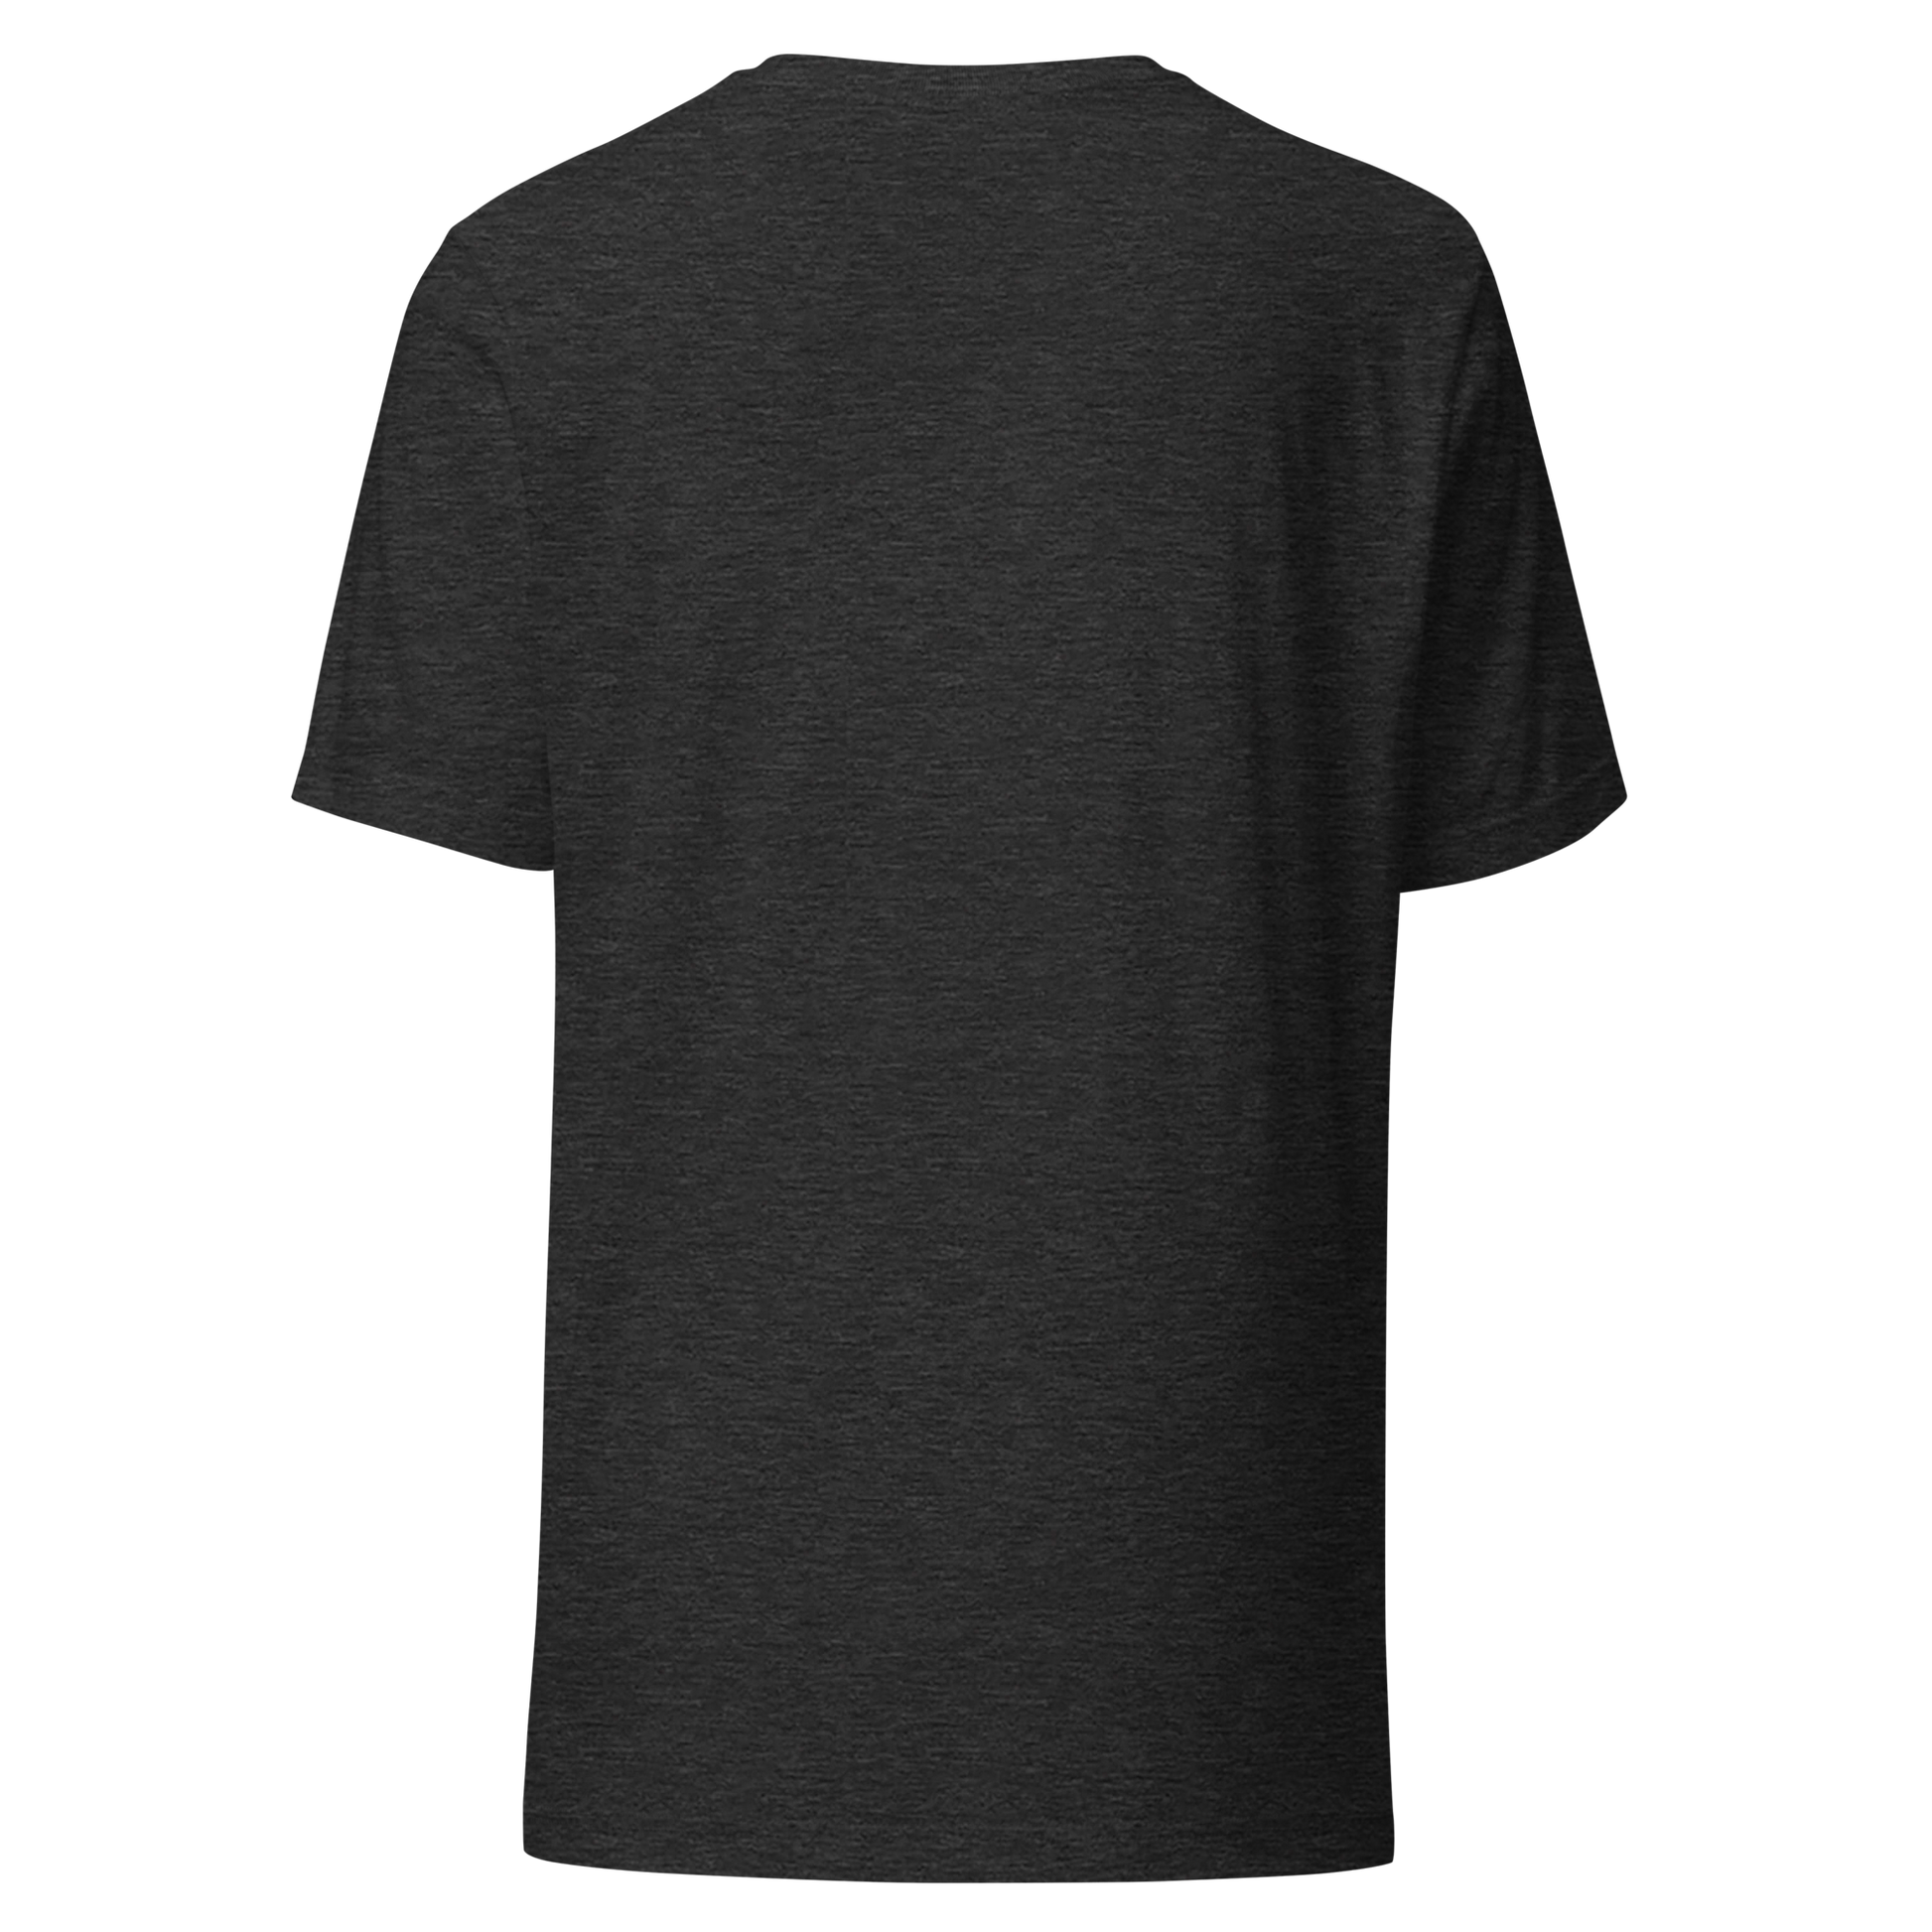 Retro Unisex T-Shirt - Stunning Summer Vibes Design Ghost Back